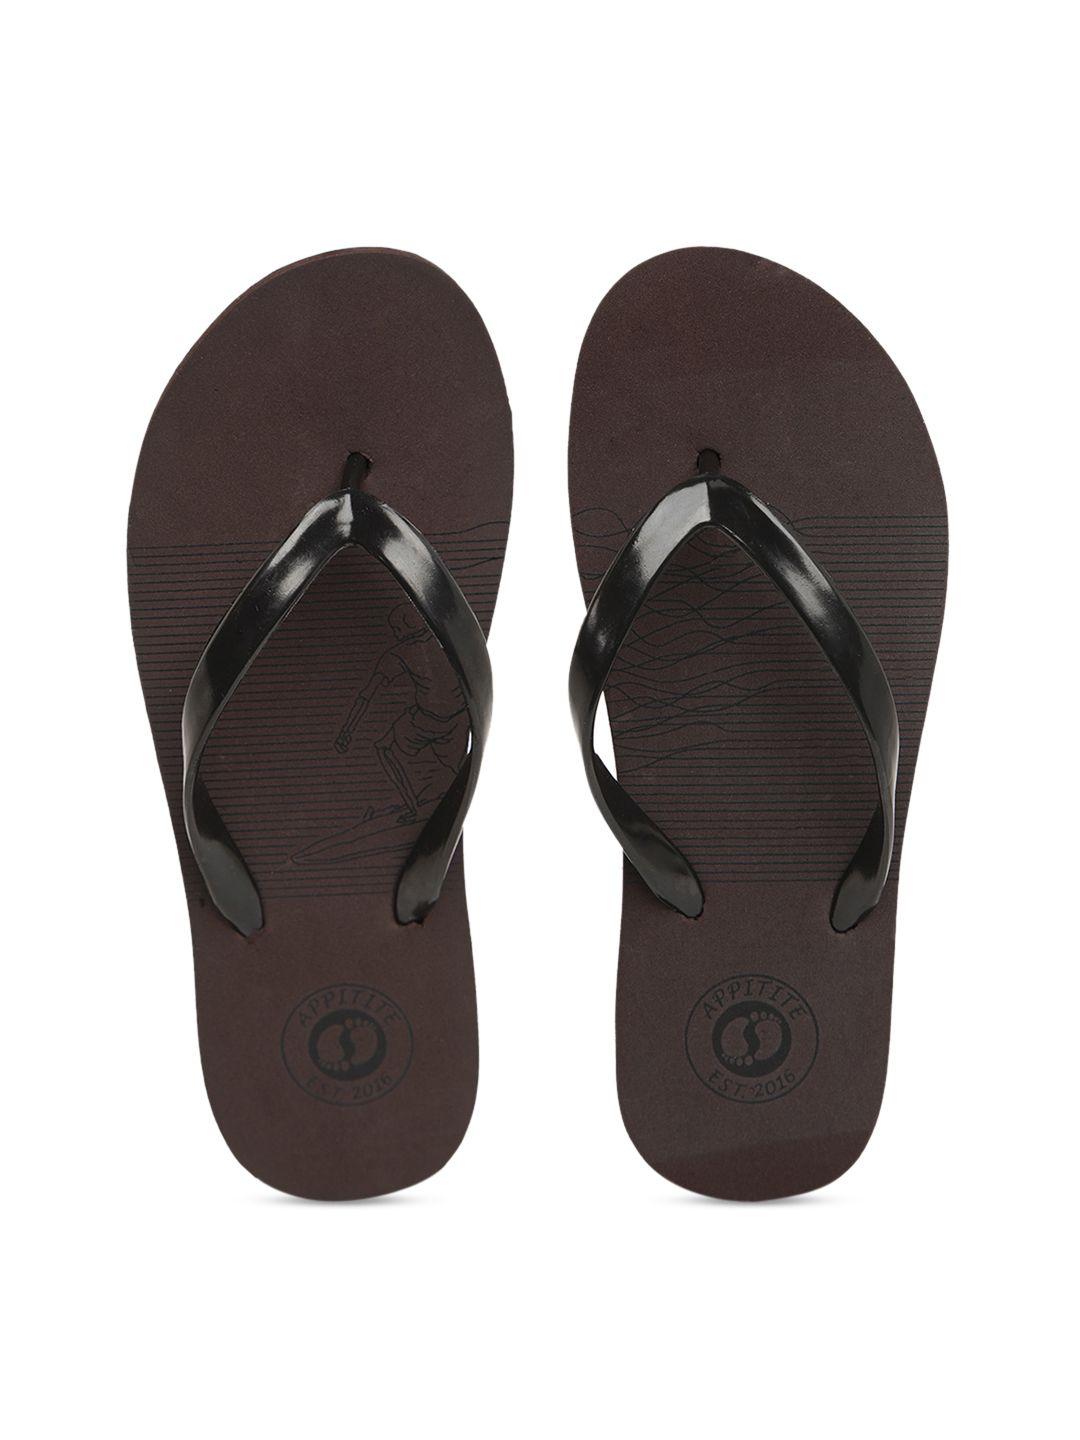 appitite women brown & black printed rubber thong flip-flops